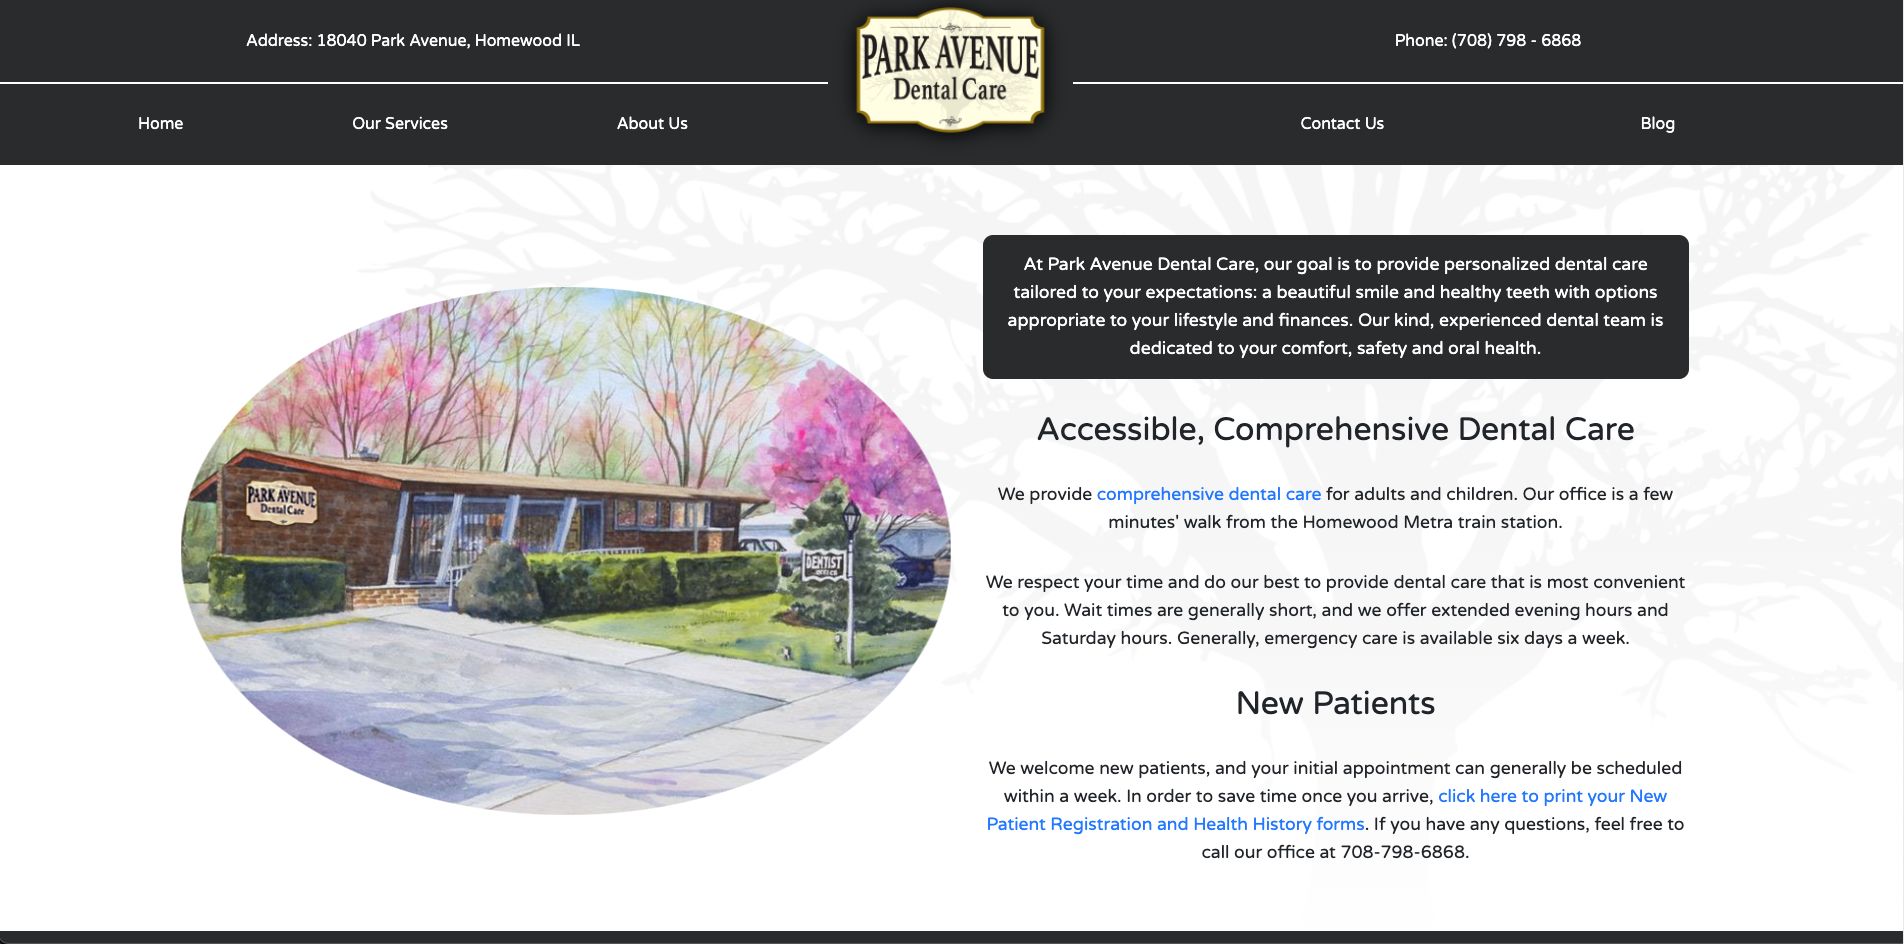 Park Avenue Dental Care Overview